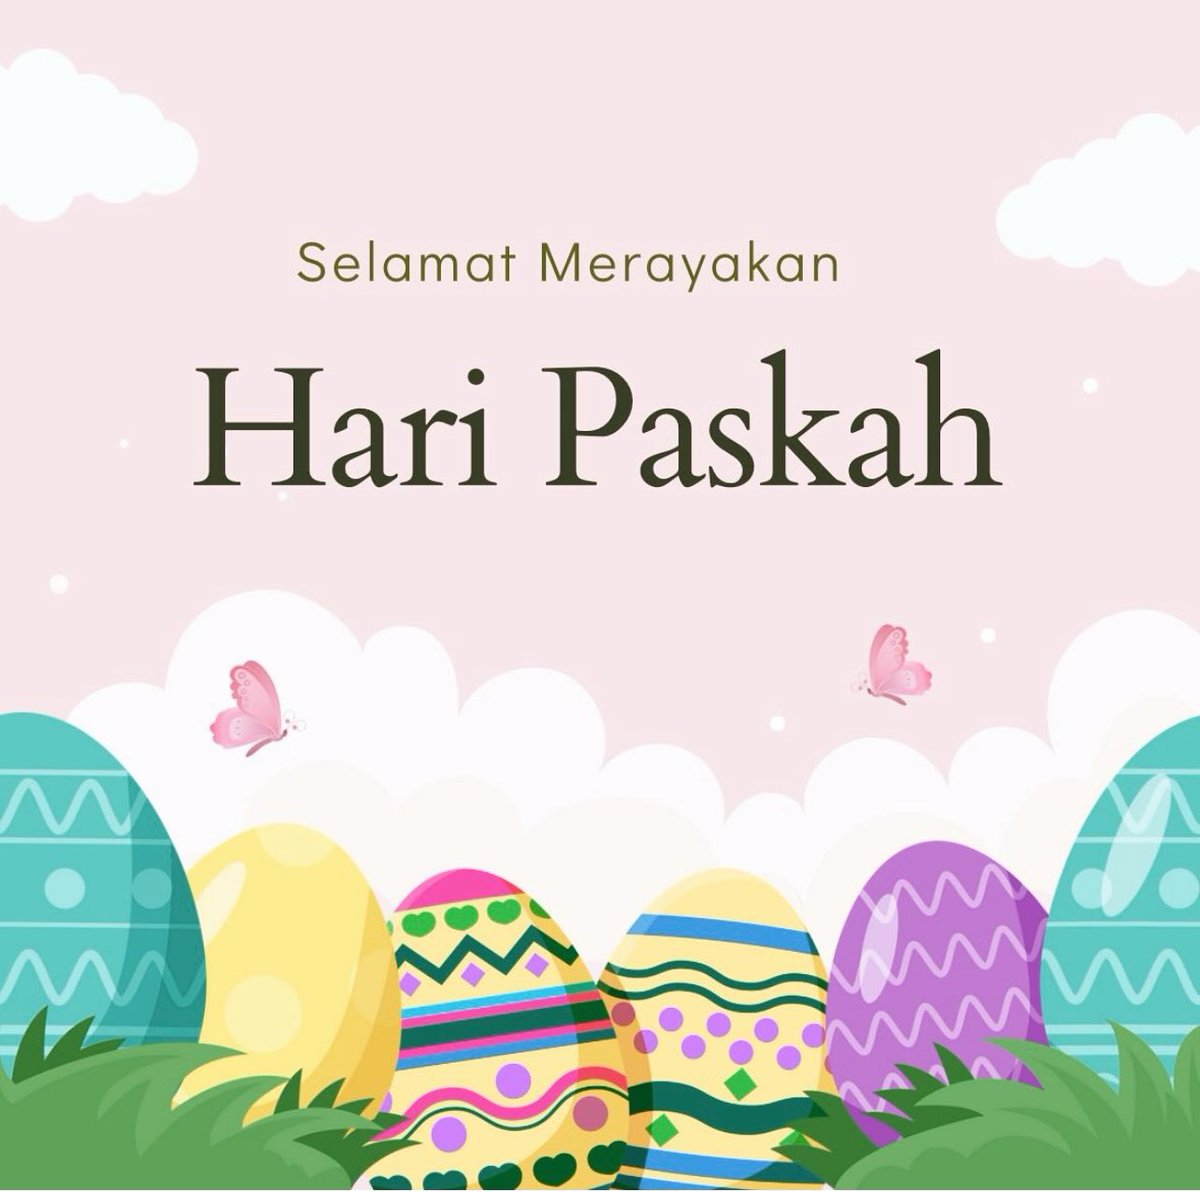 Kami dari Kedutaan #Siprus mengucapkan Selamat Paskah kepada semua yang merayakannya di #Indonesia dan di seluruh dunia. #Paskah #Easter #CyprusinIndonesia